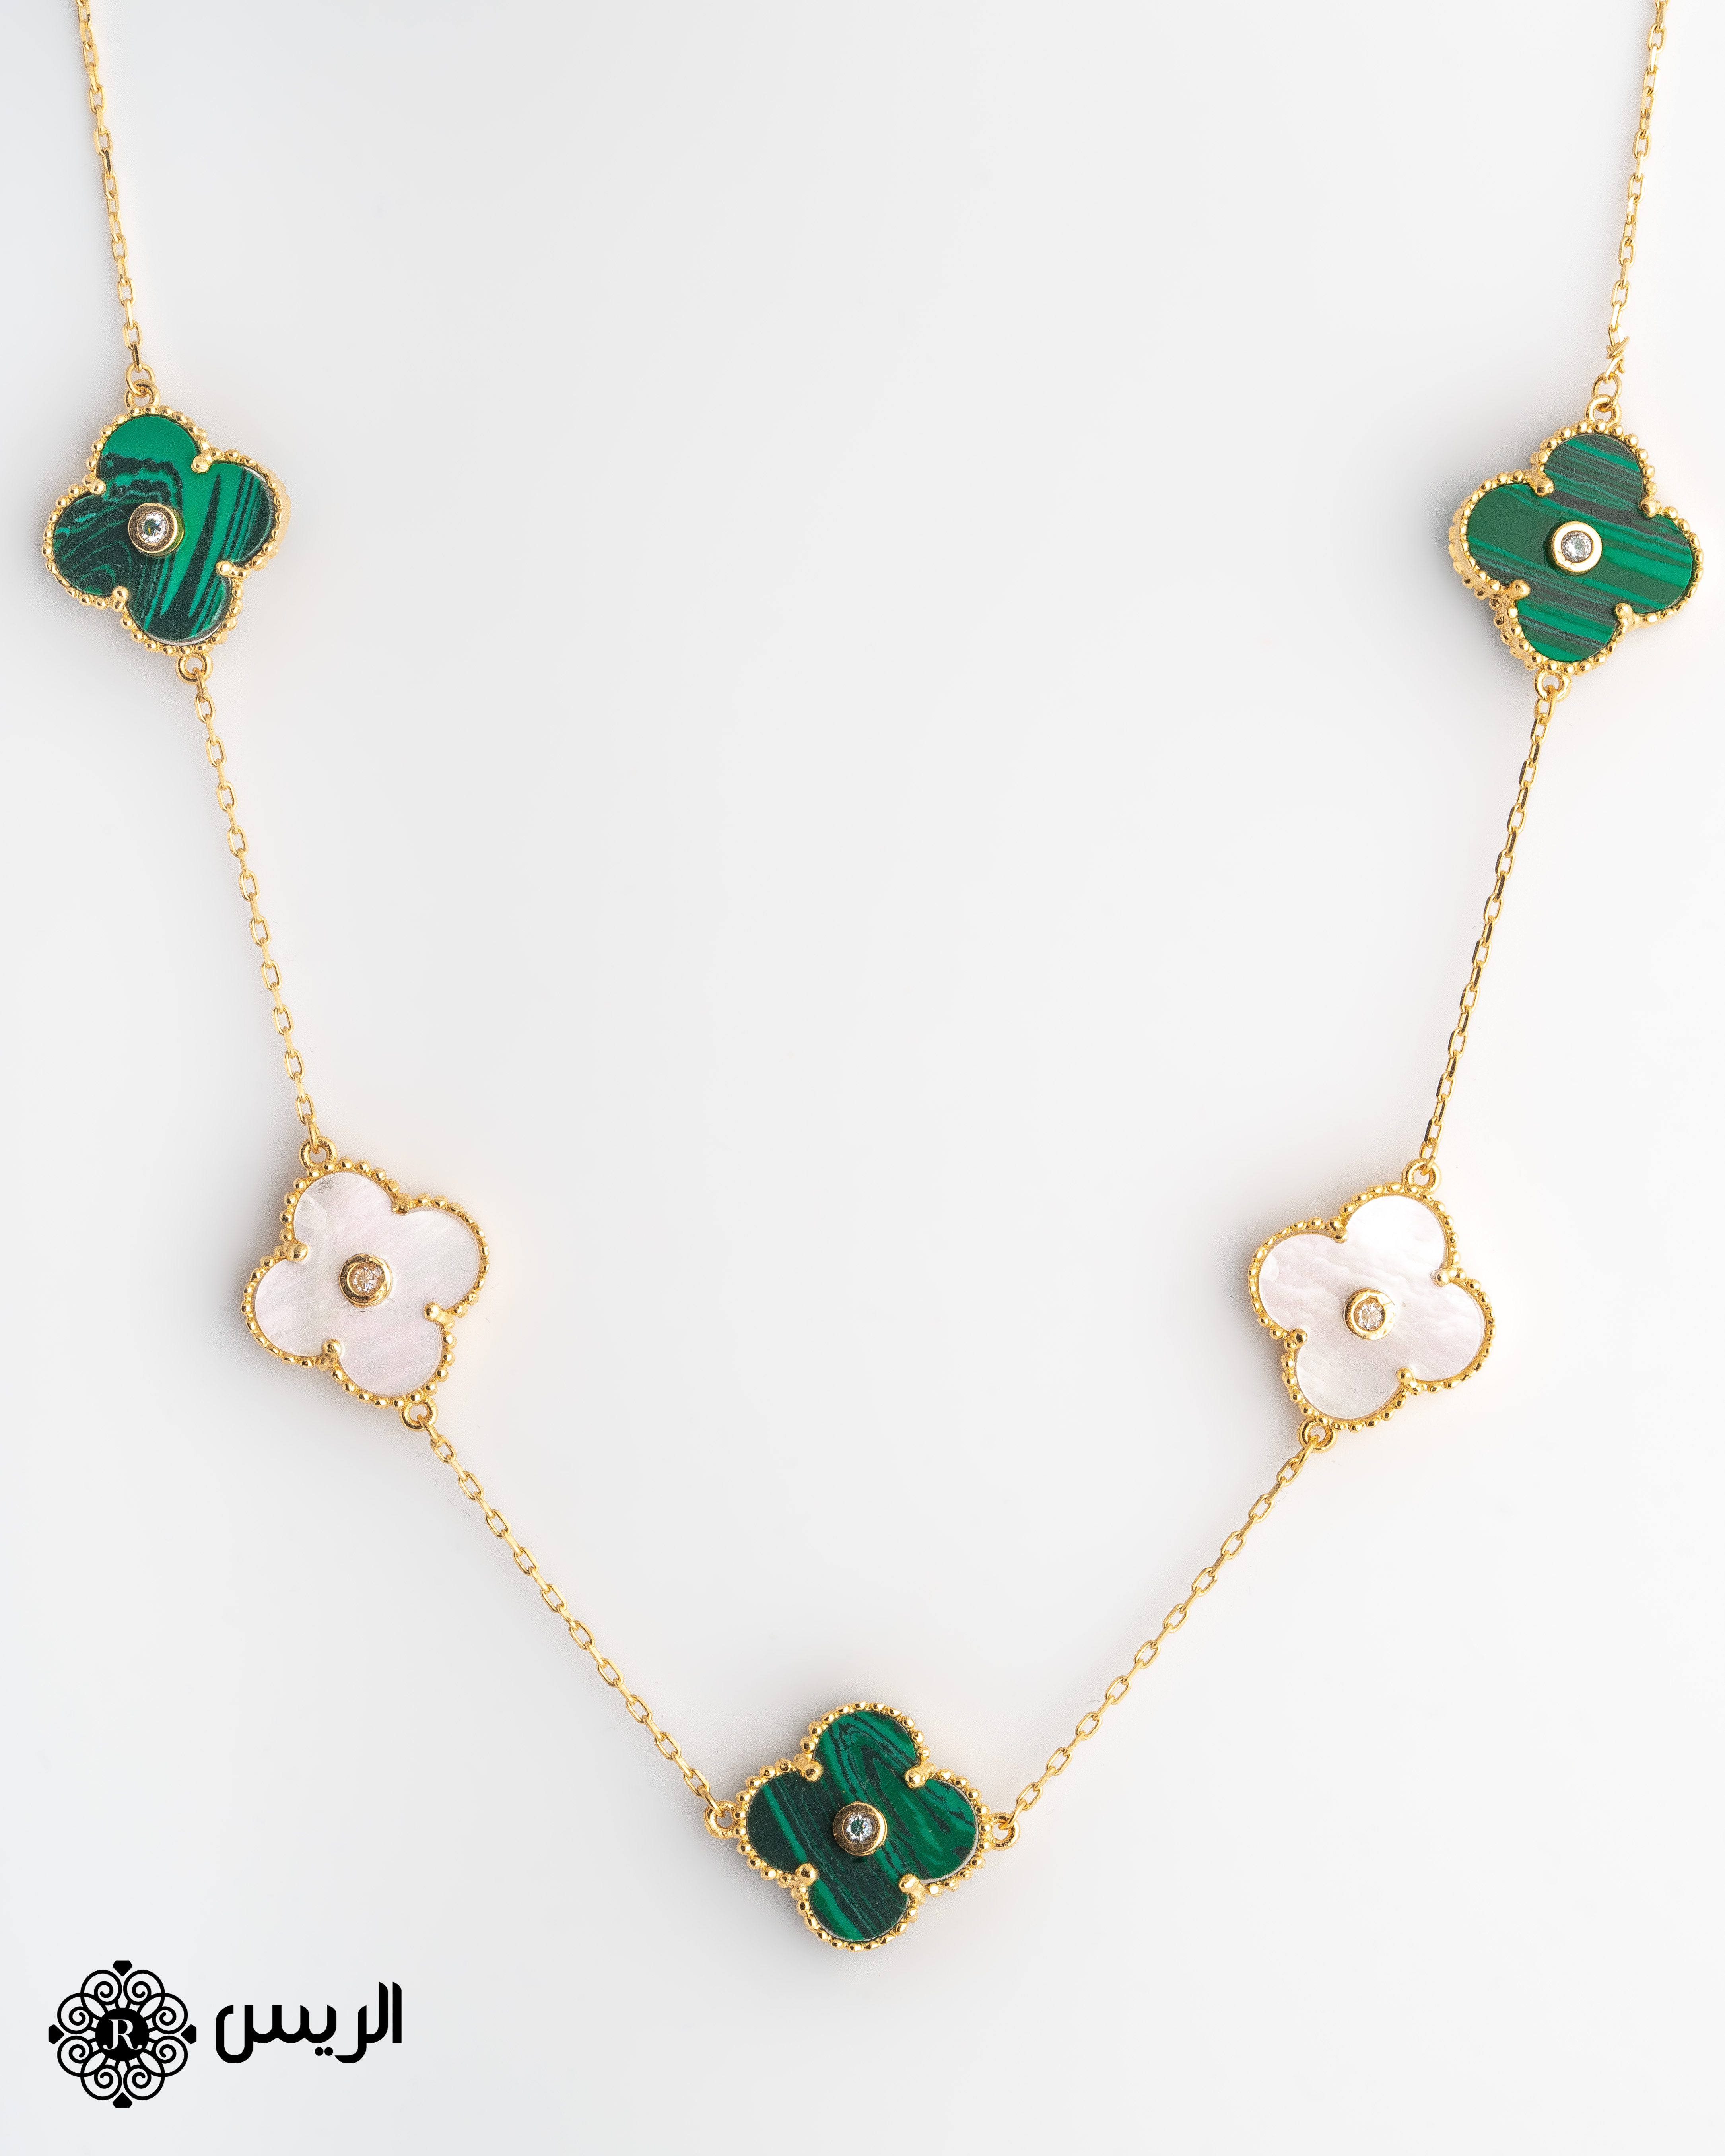 Raies jewelry Short Necklace 5 Flowers عقد قصير بـ5 وردات الريس للمجوهرات